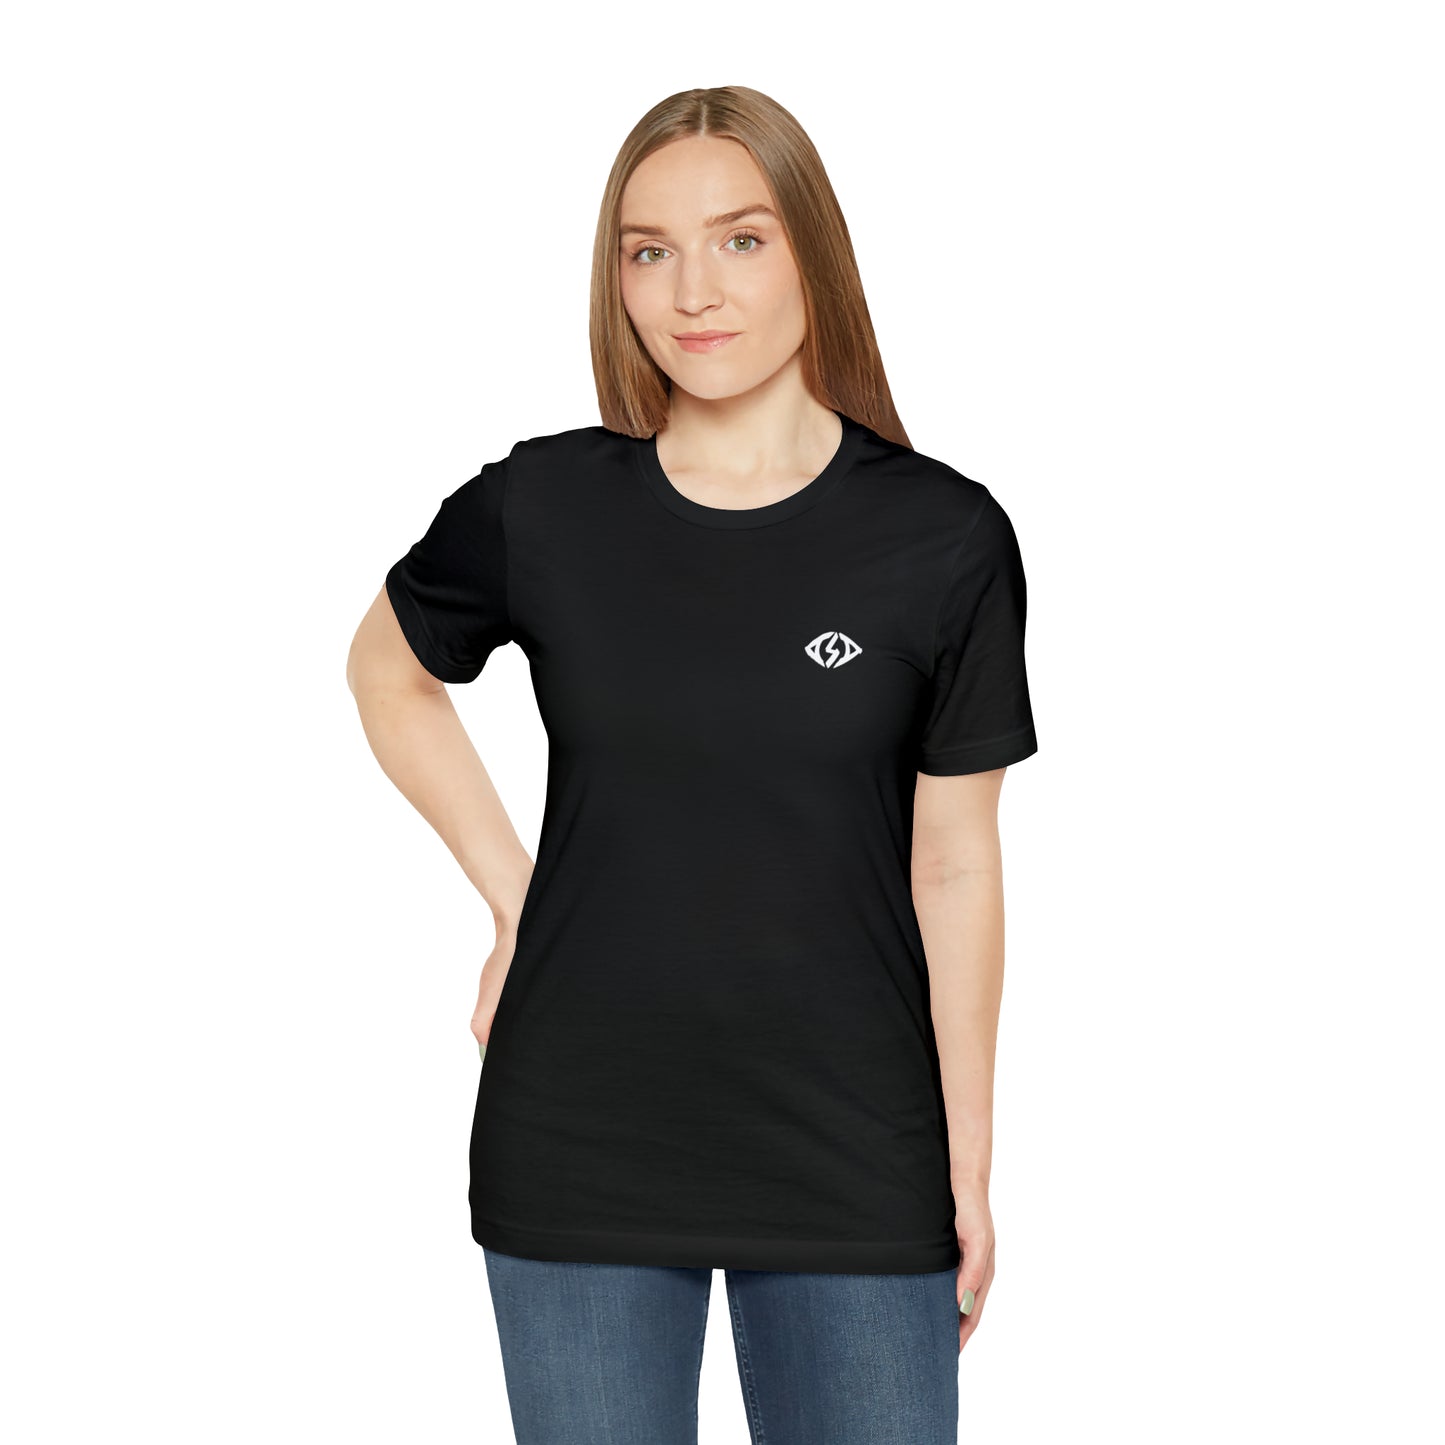 SHIVER Unisex Black Evil Eye T-shirt